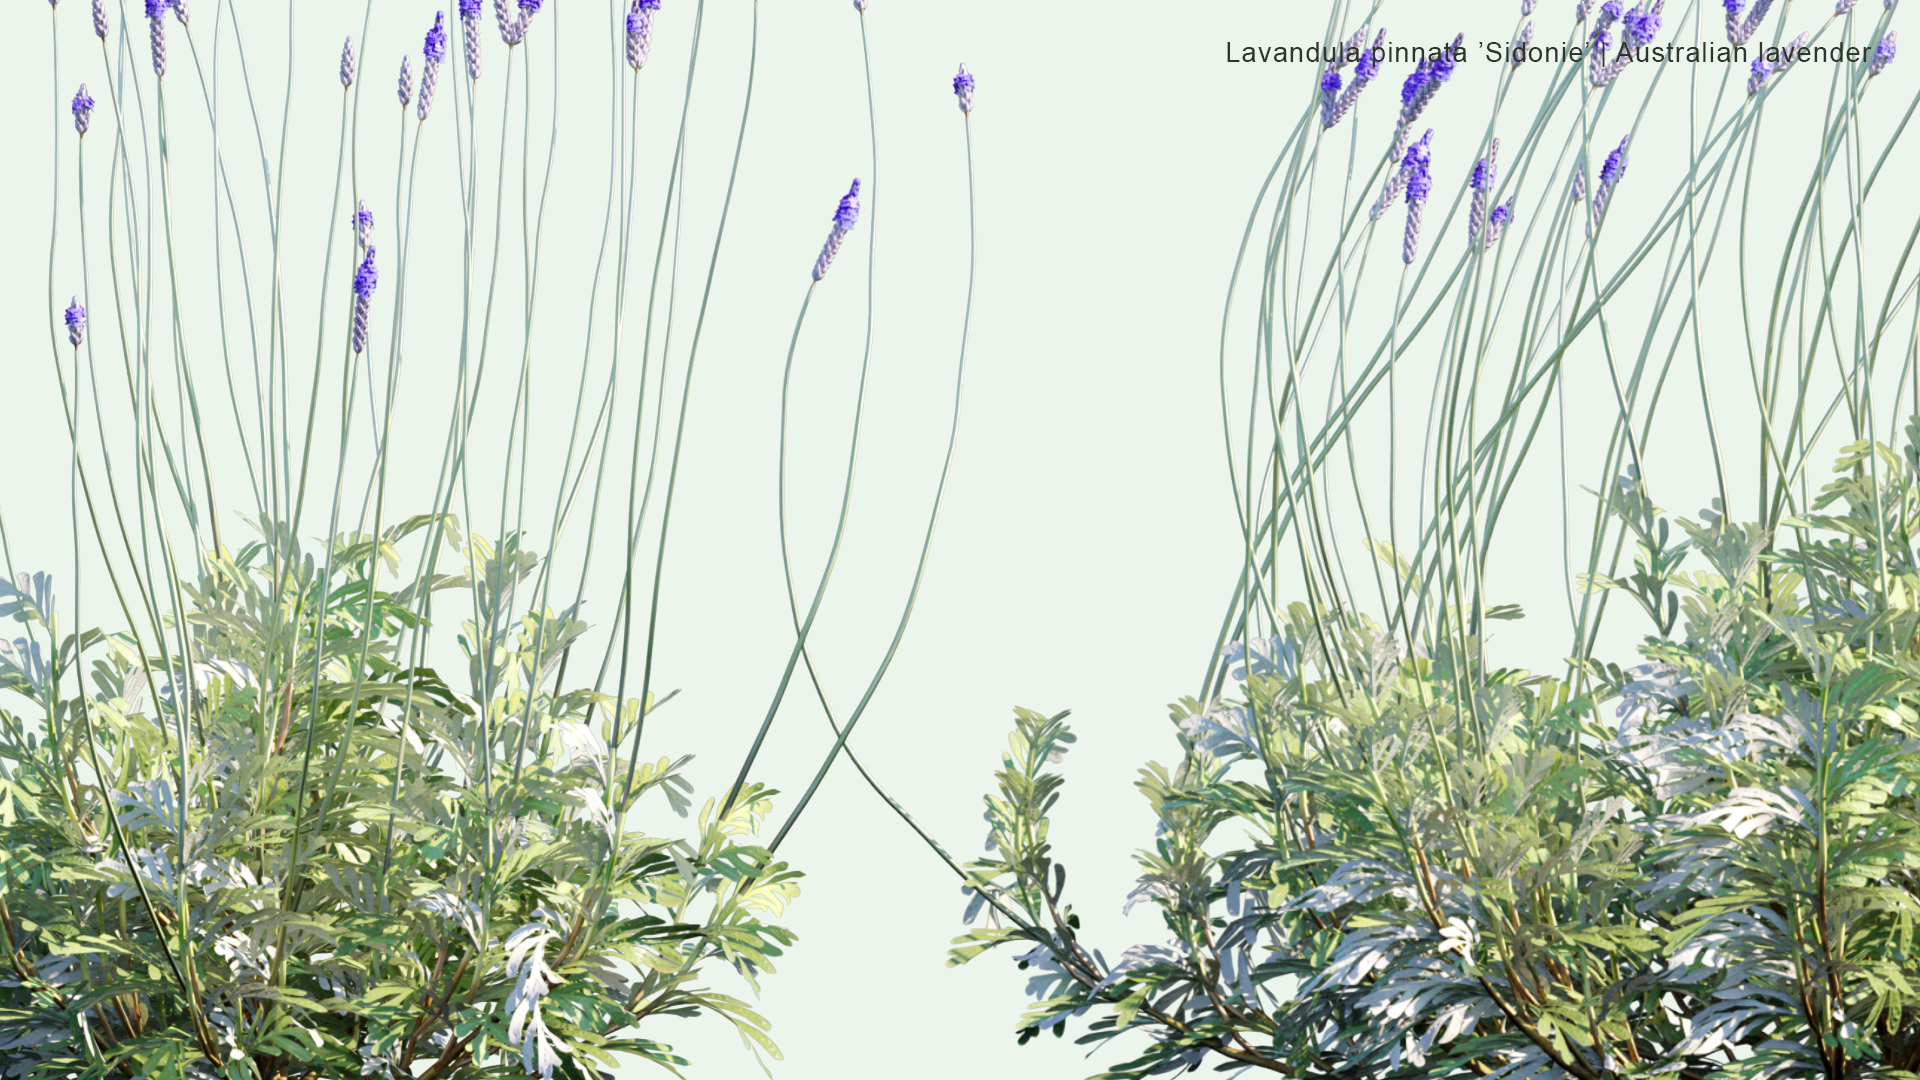 2D Lavandula Pinnata 'Sidonie' - Australian Lavender